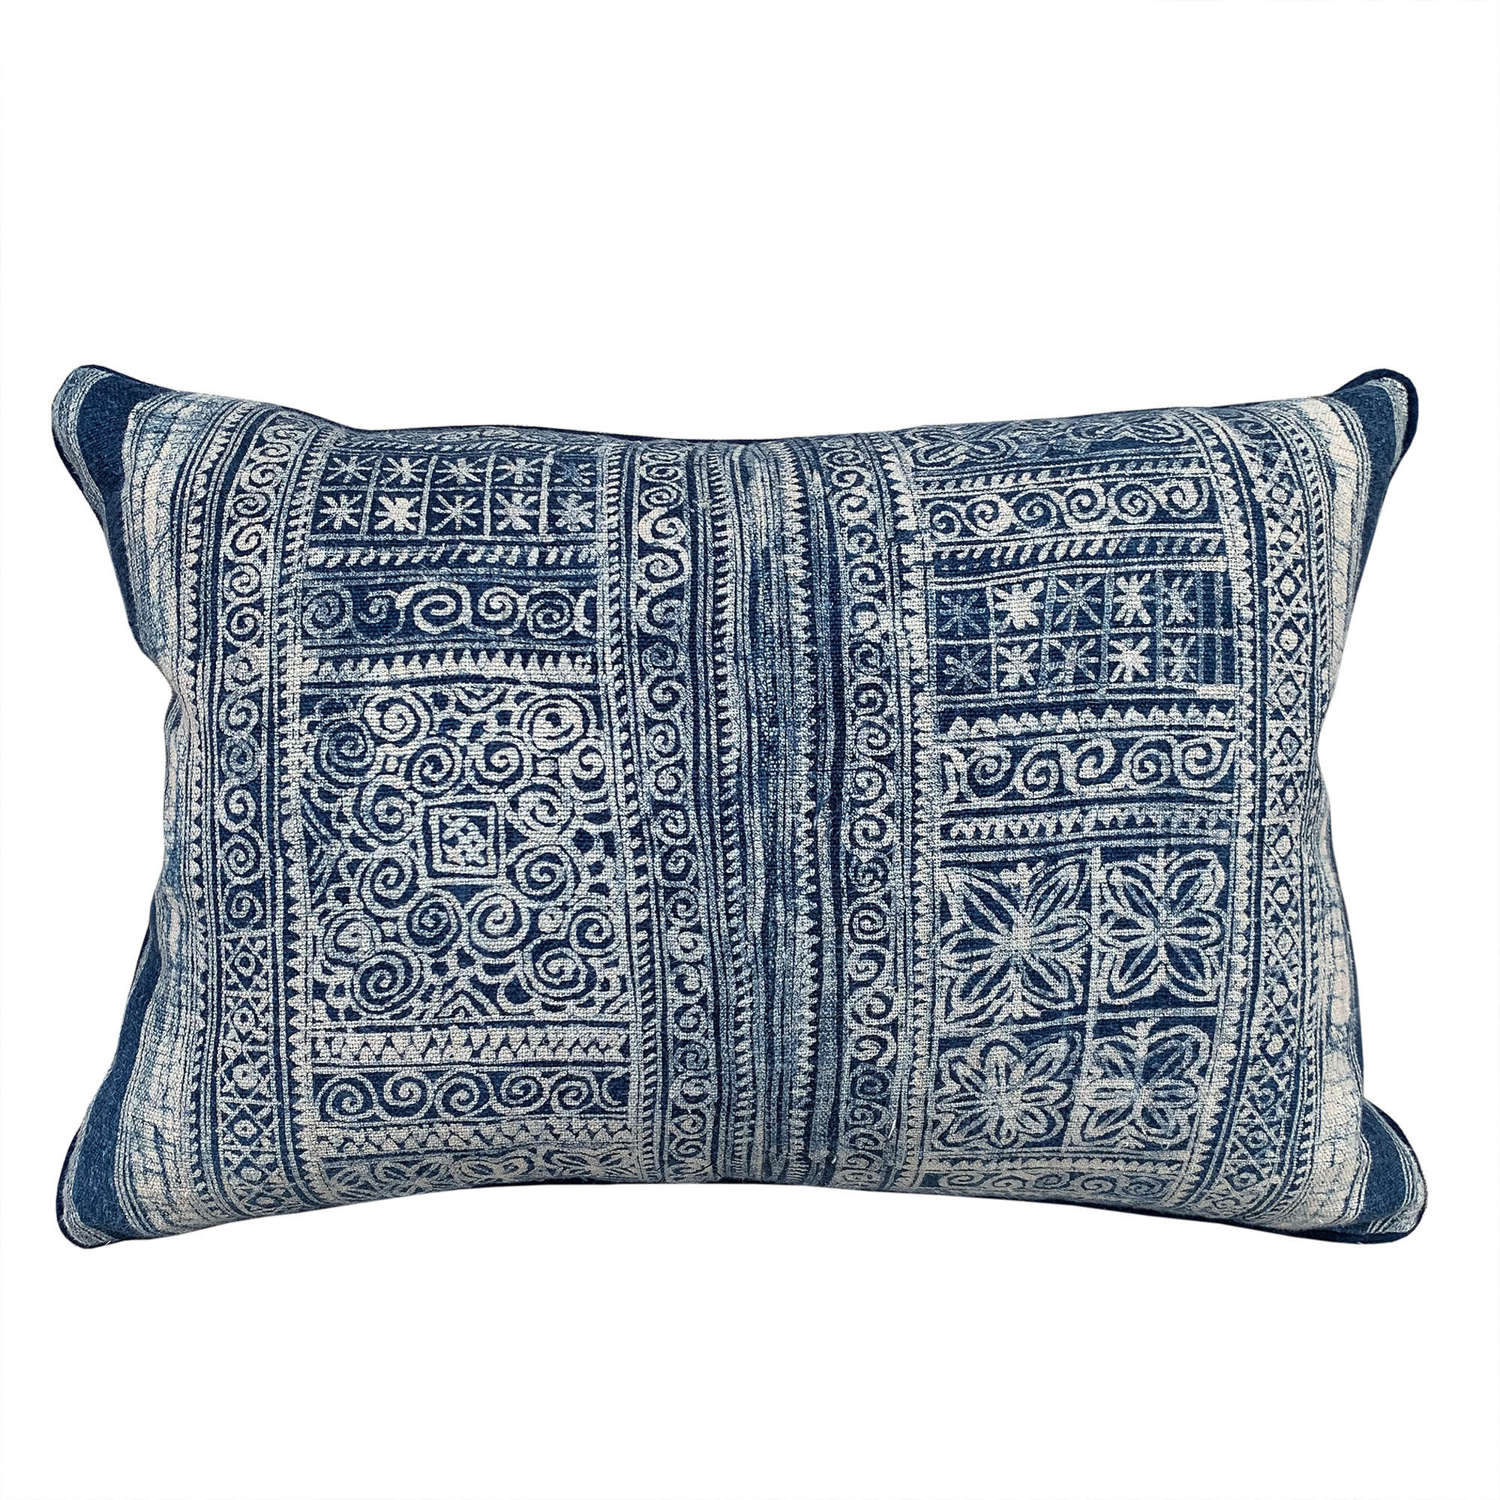 Vintage Indigo Batik Cushion